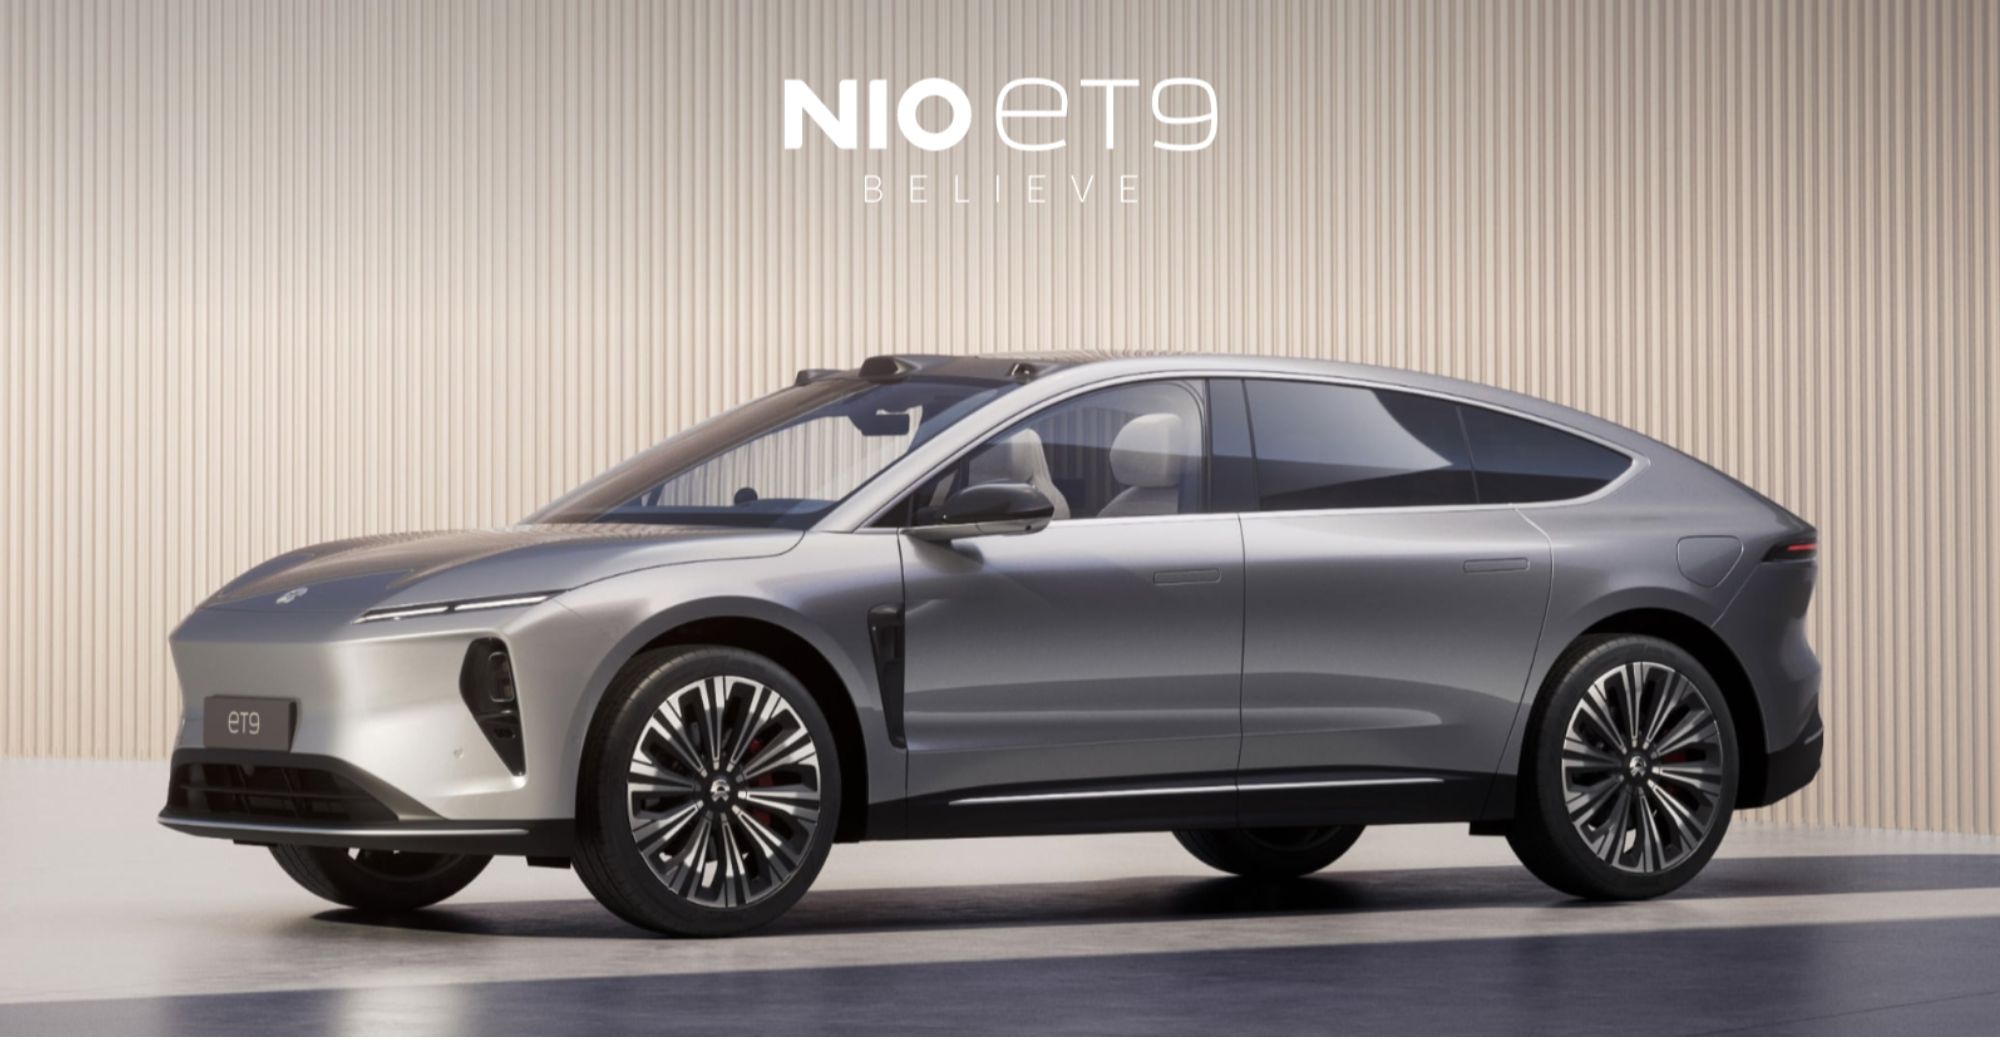 NIO Executive Flagship Sedan ET9 Now Available for Pre-order